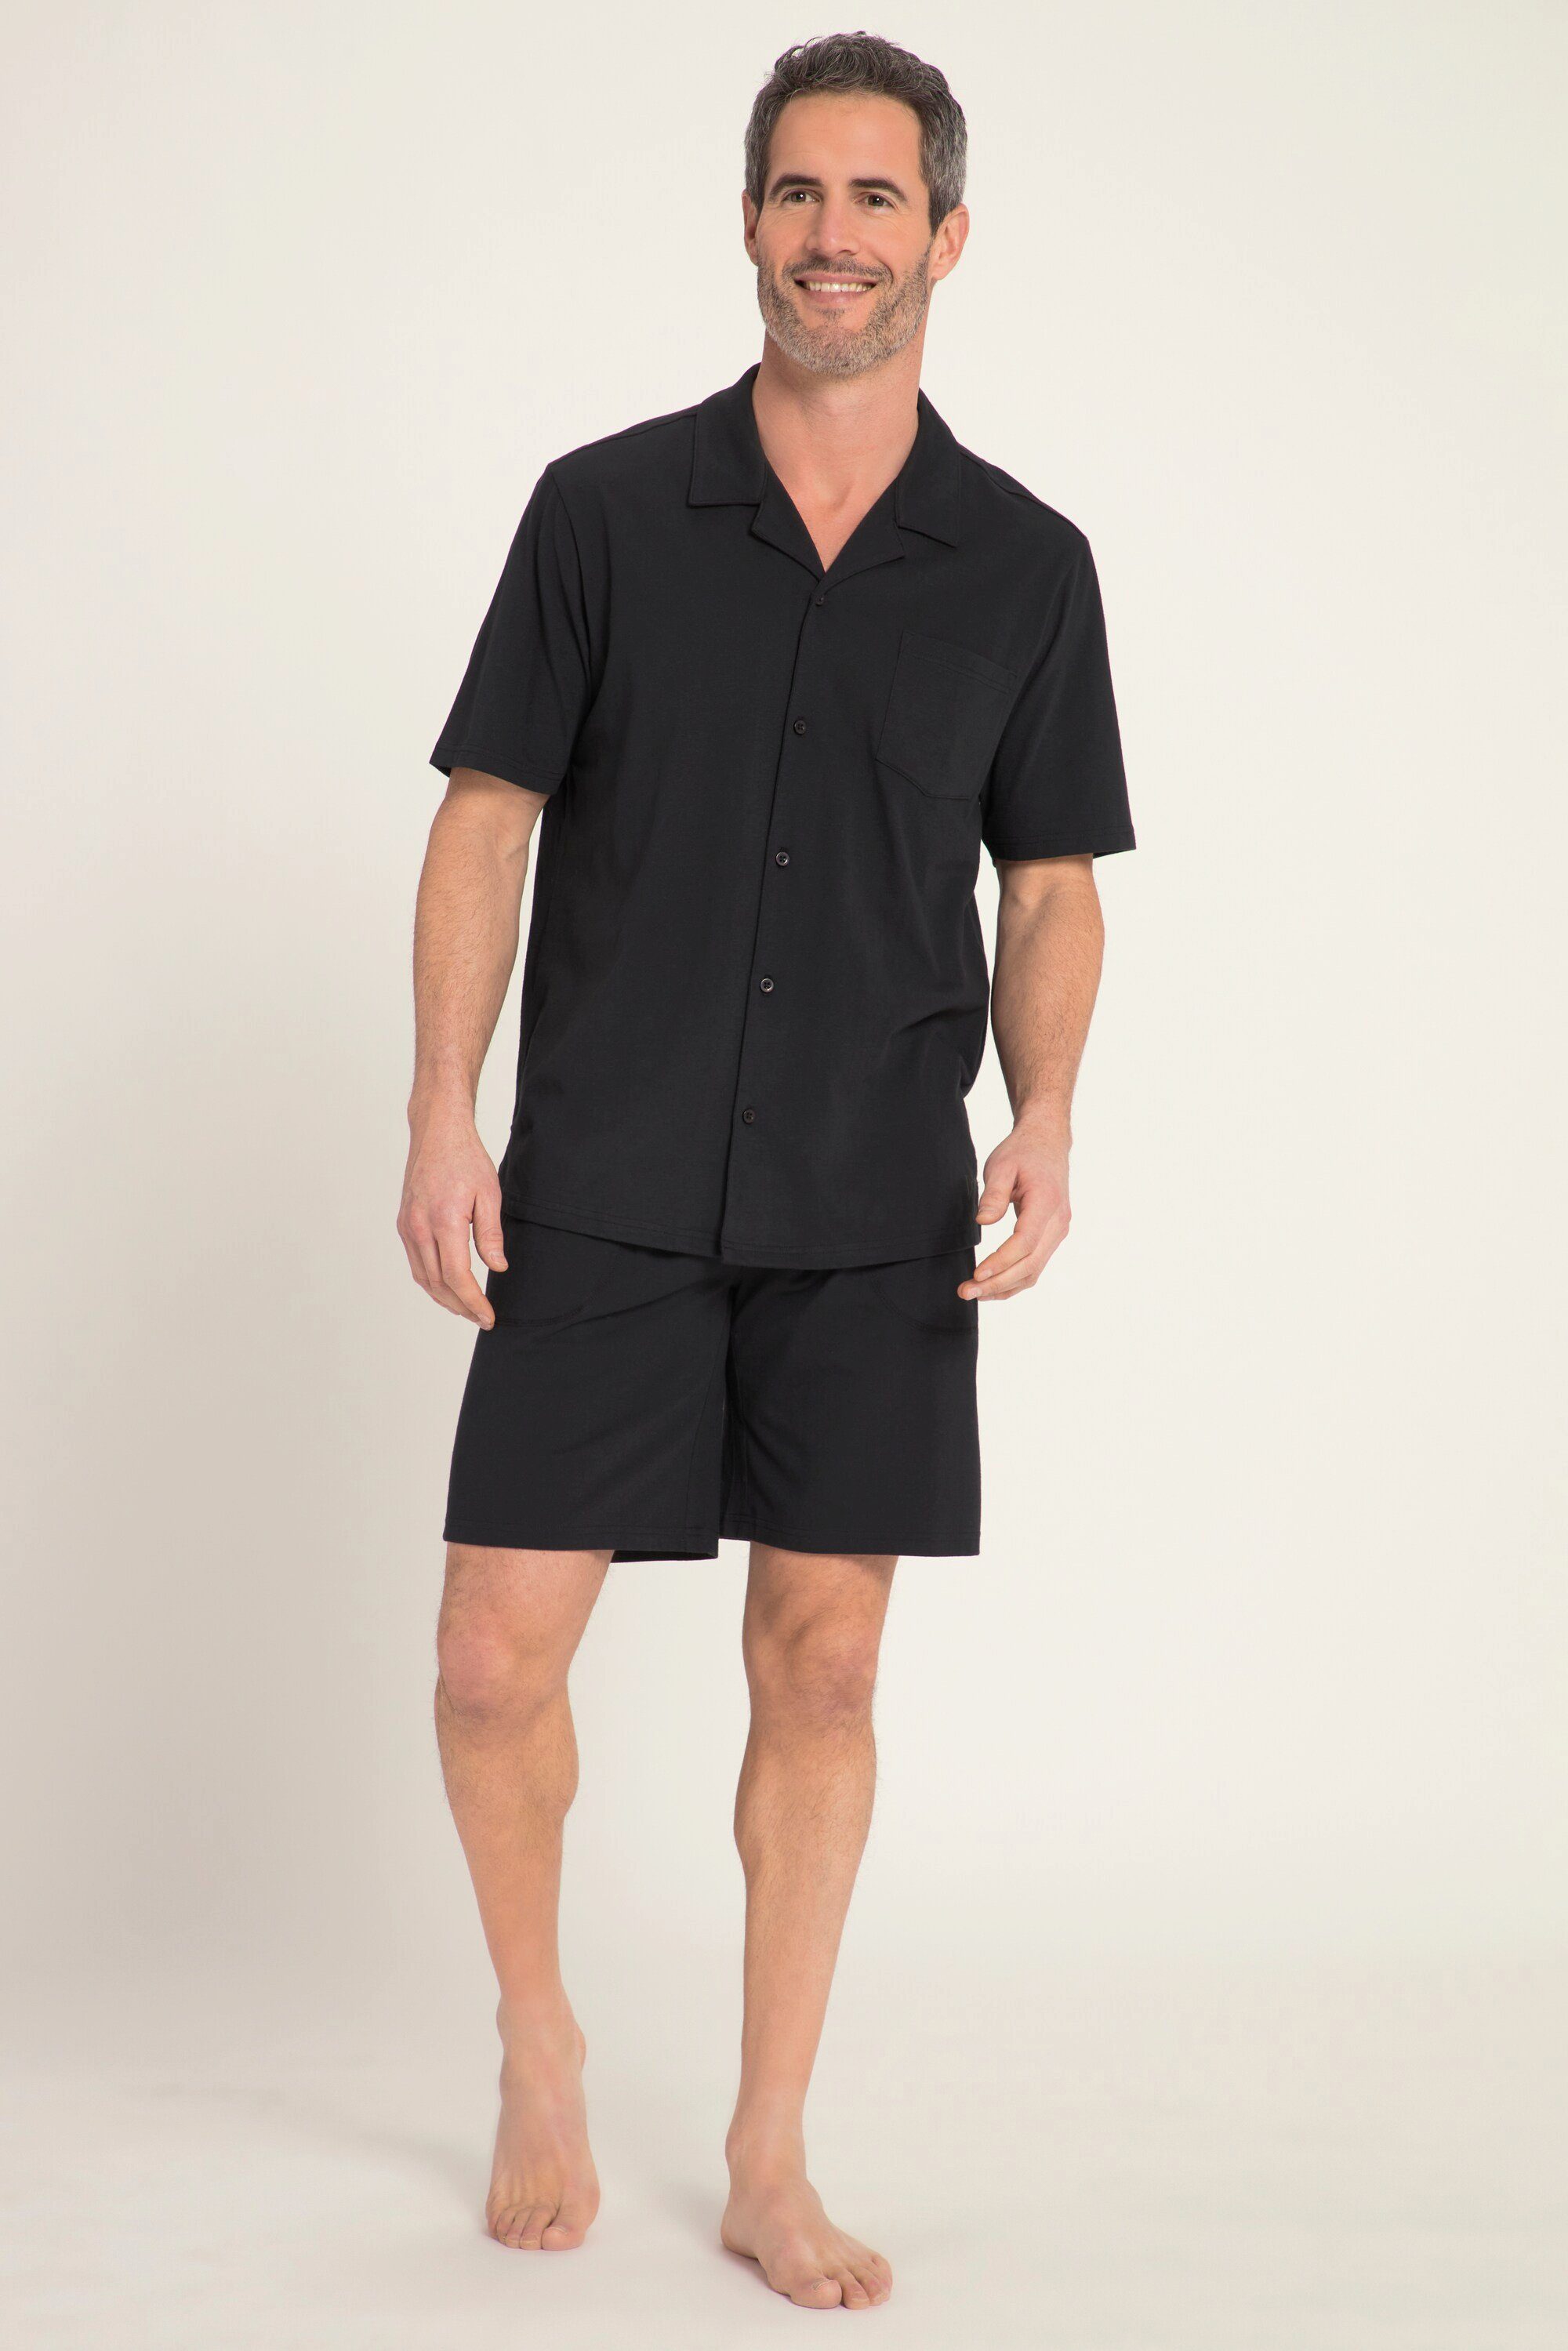 JP1880 Schlafanzug Schlafanzug Homewear Oberteil Cuba Kragen Shorts